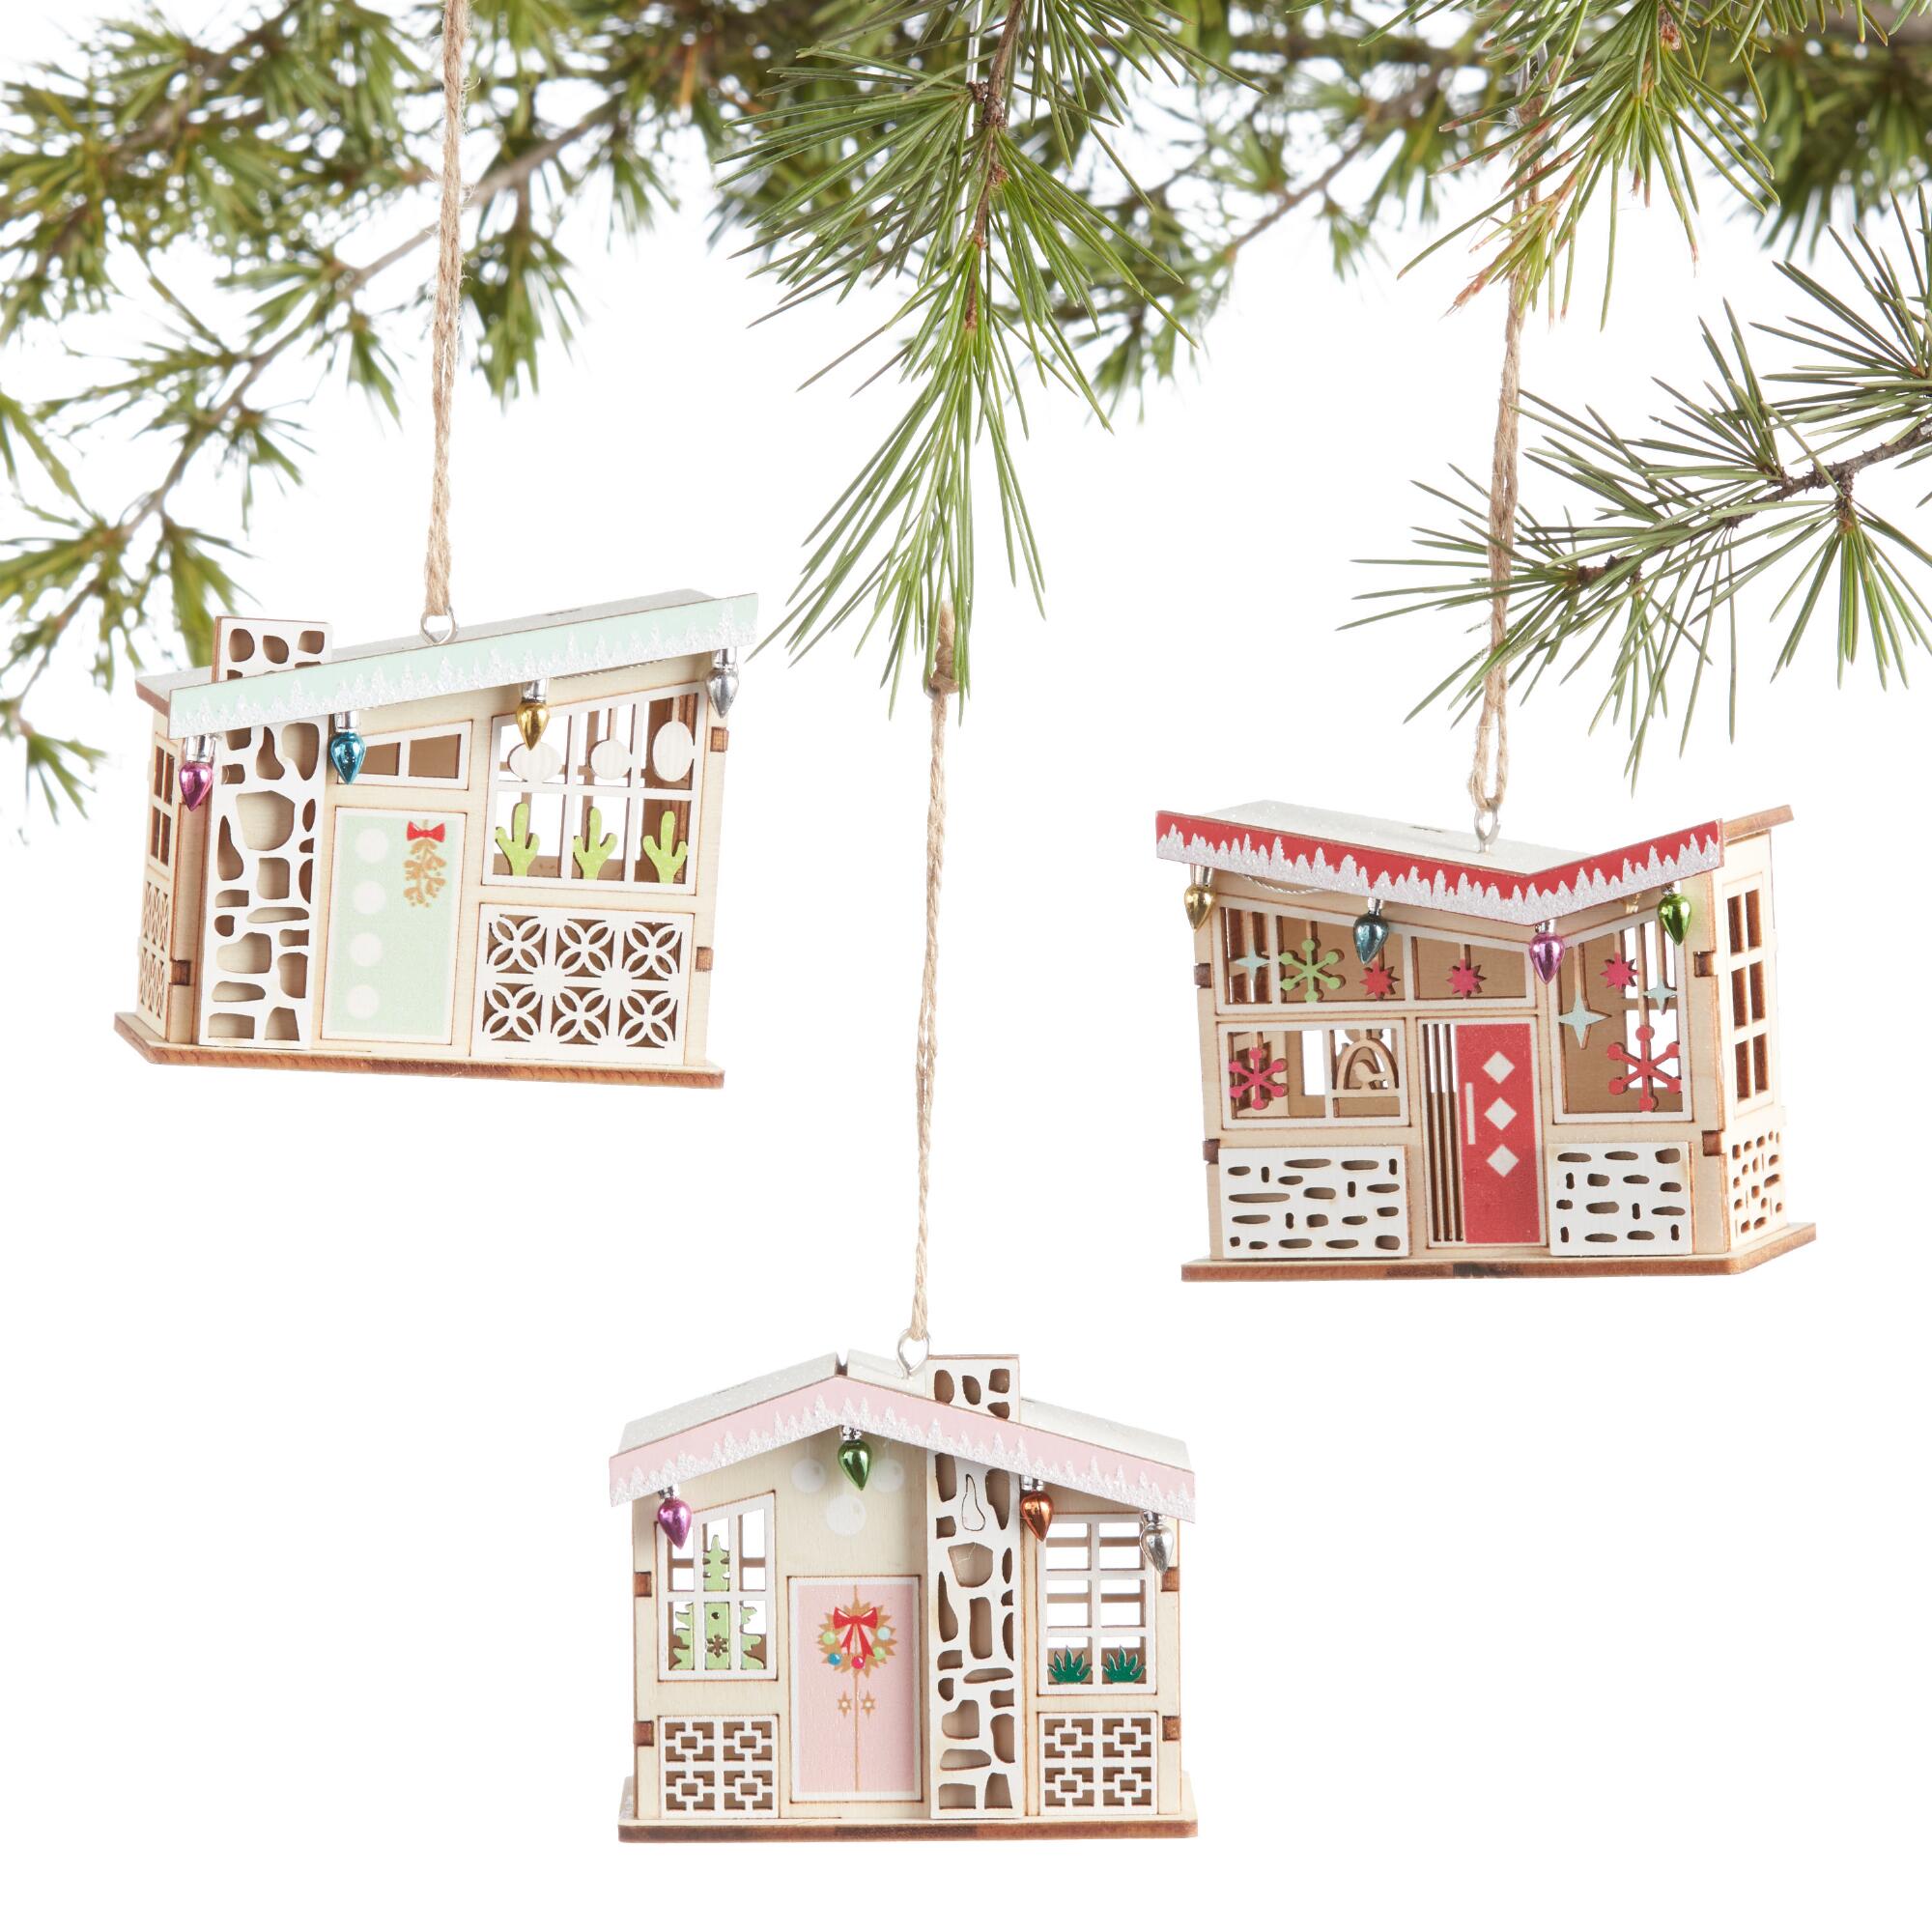 Woodcut Mid Century Modern House Ornaments Set of 3: Multi by World Market